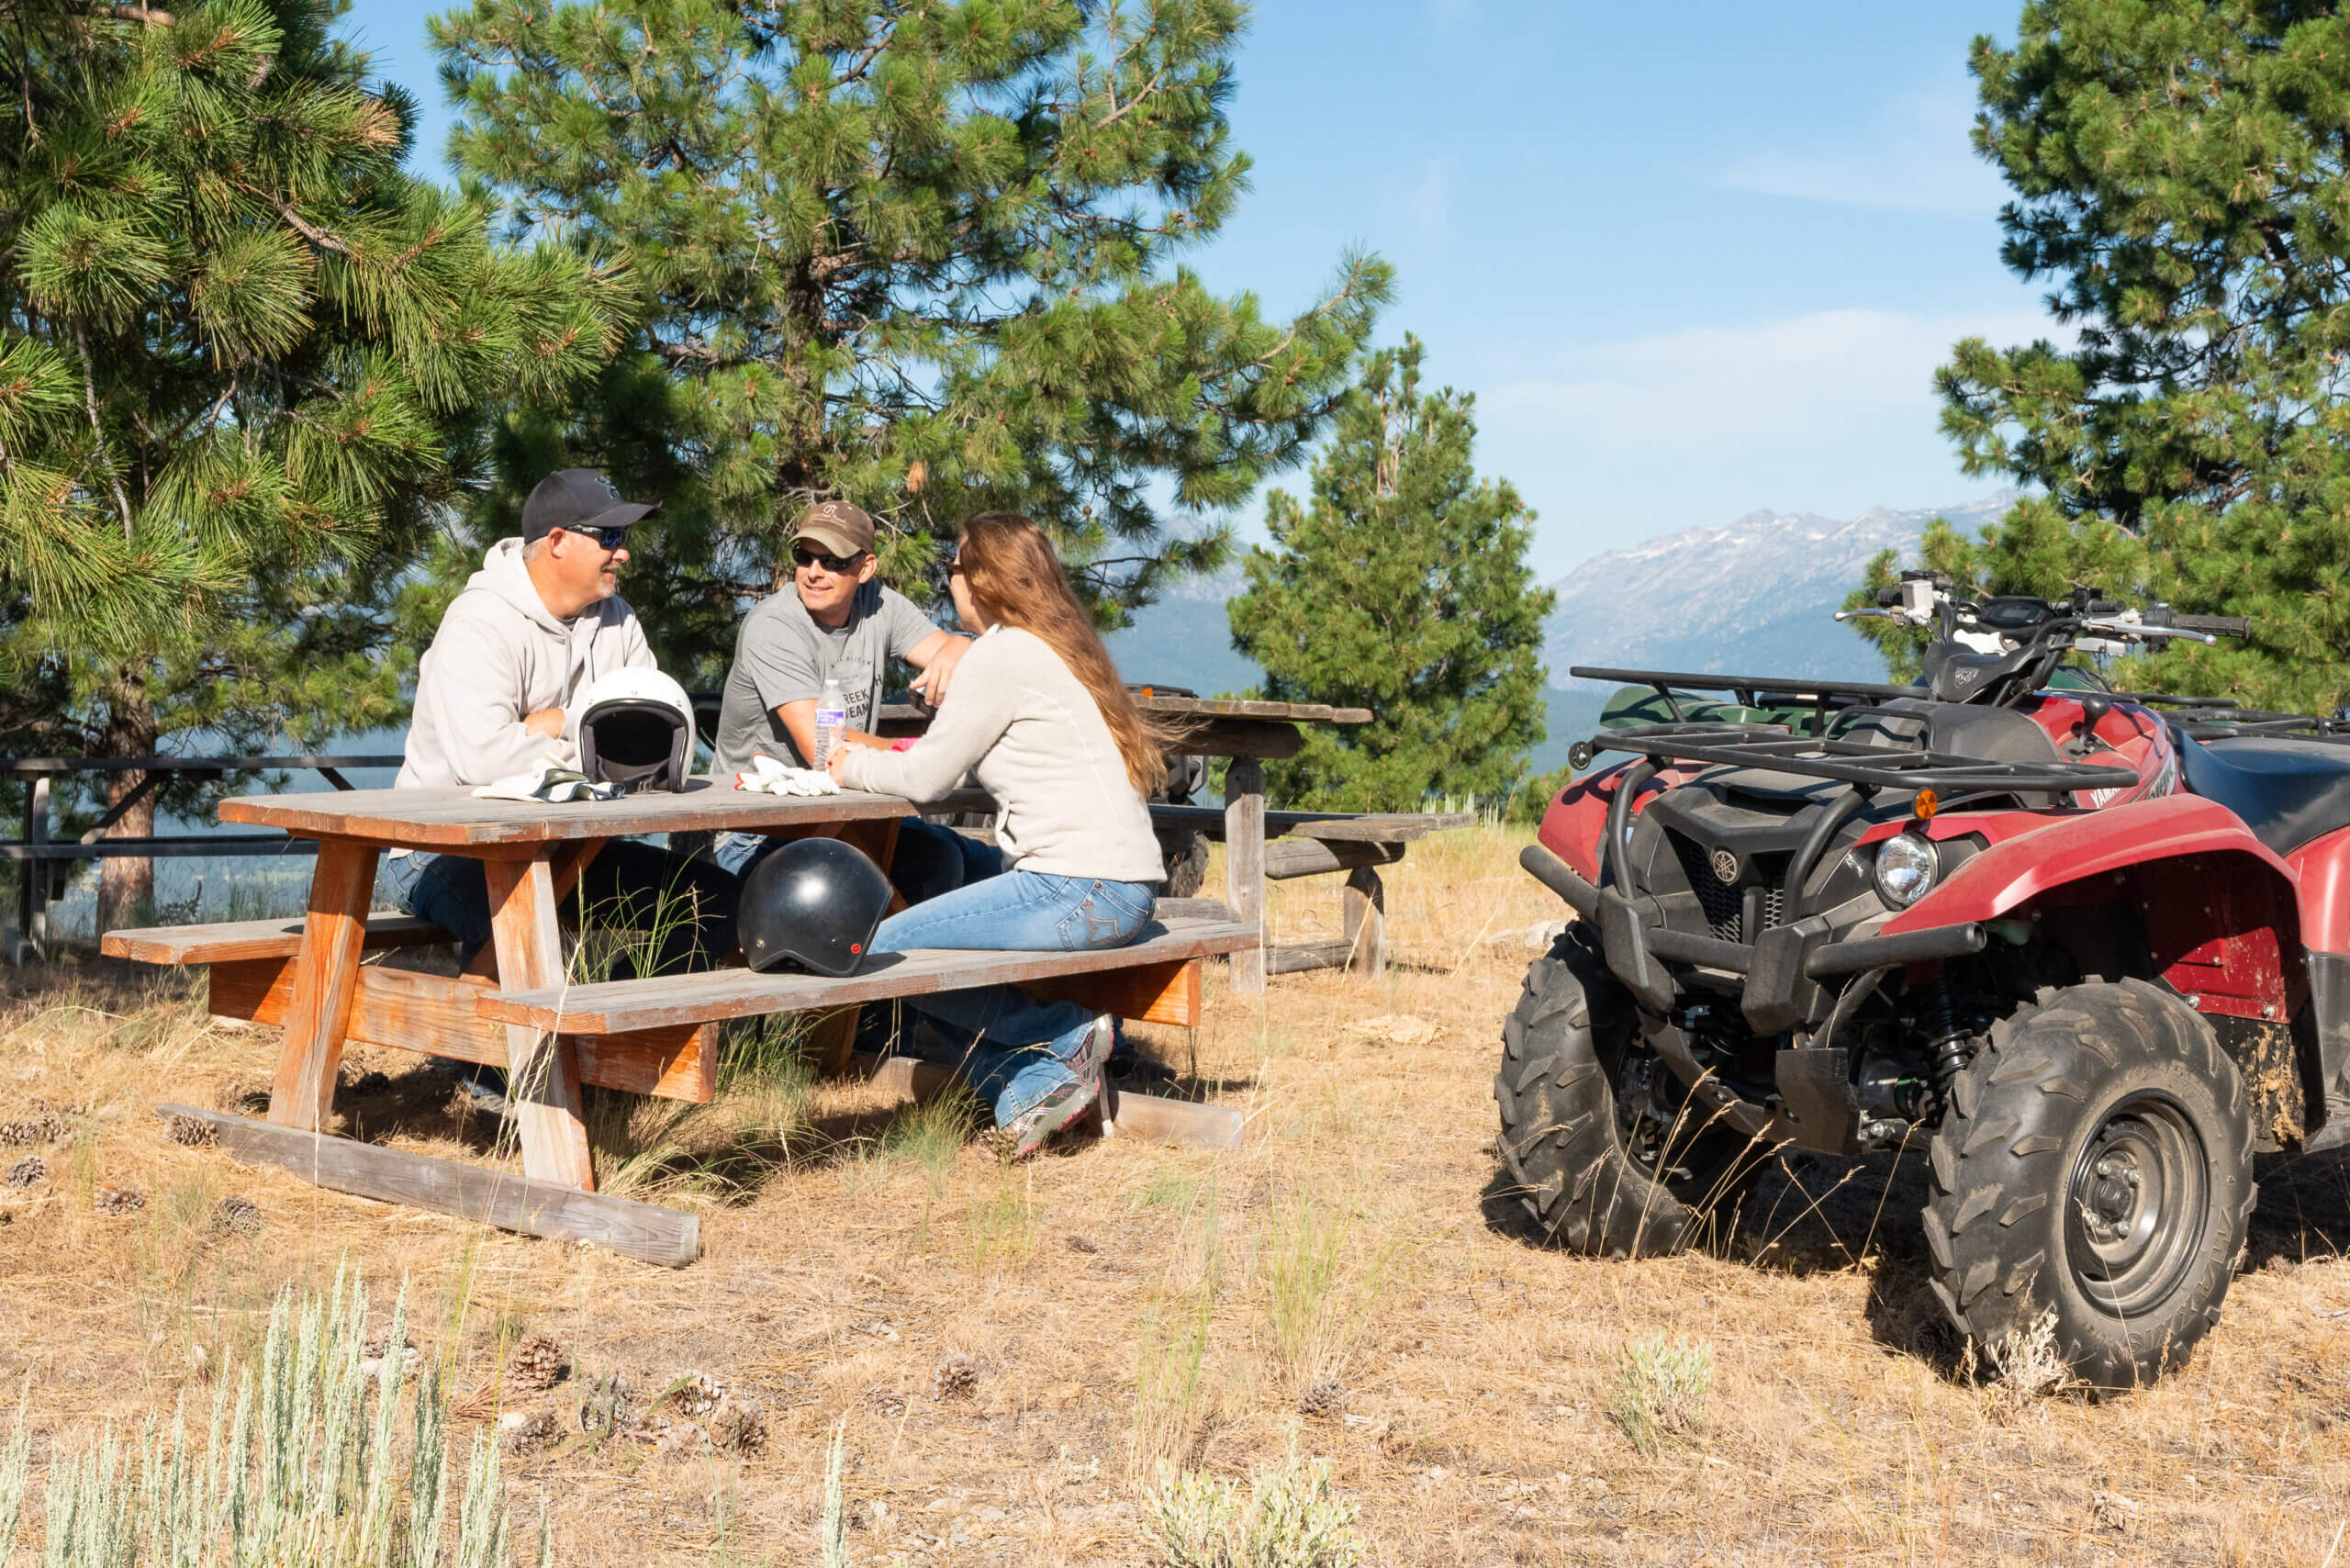 ATV - all terrain vehicle Triple Creek Ranch Experience on the CB Ranch